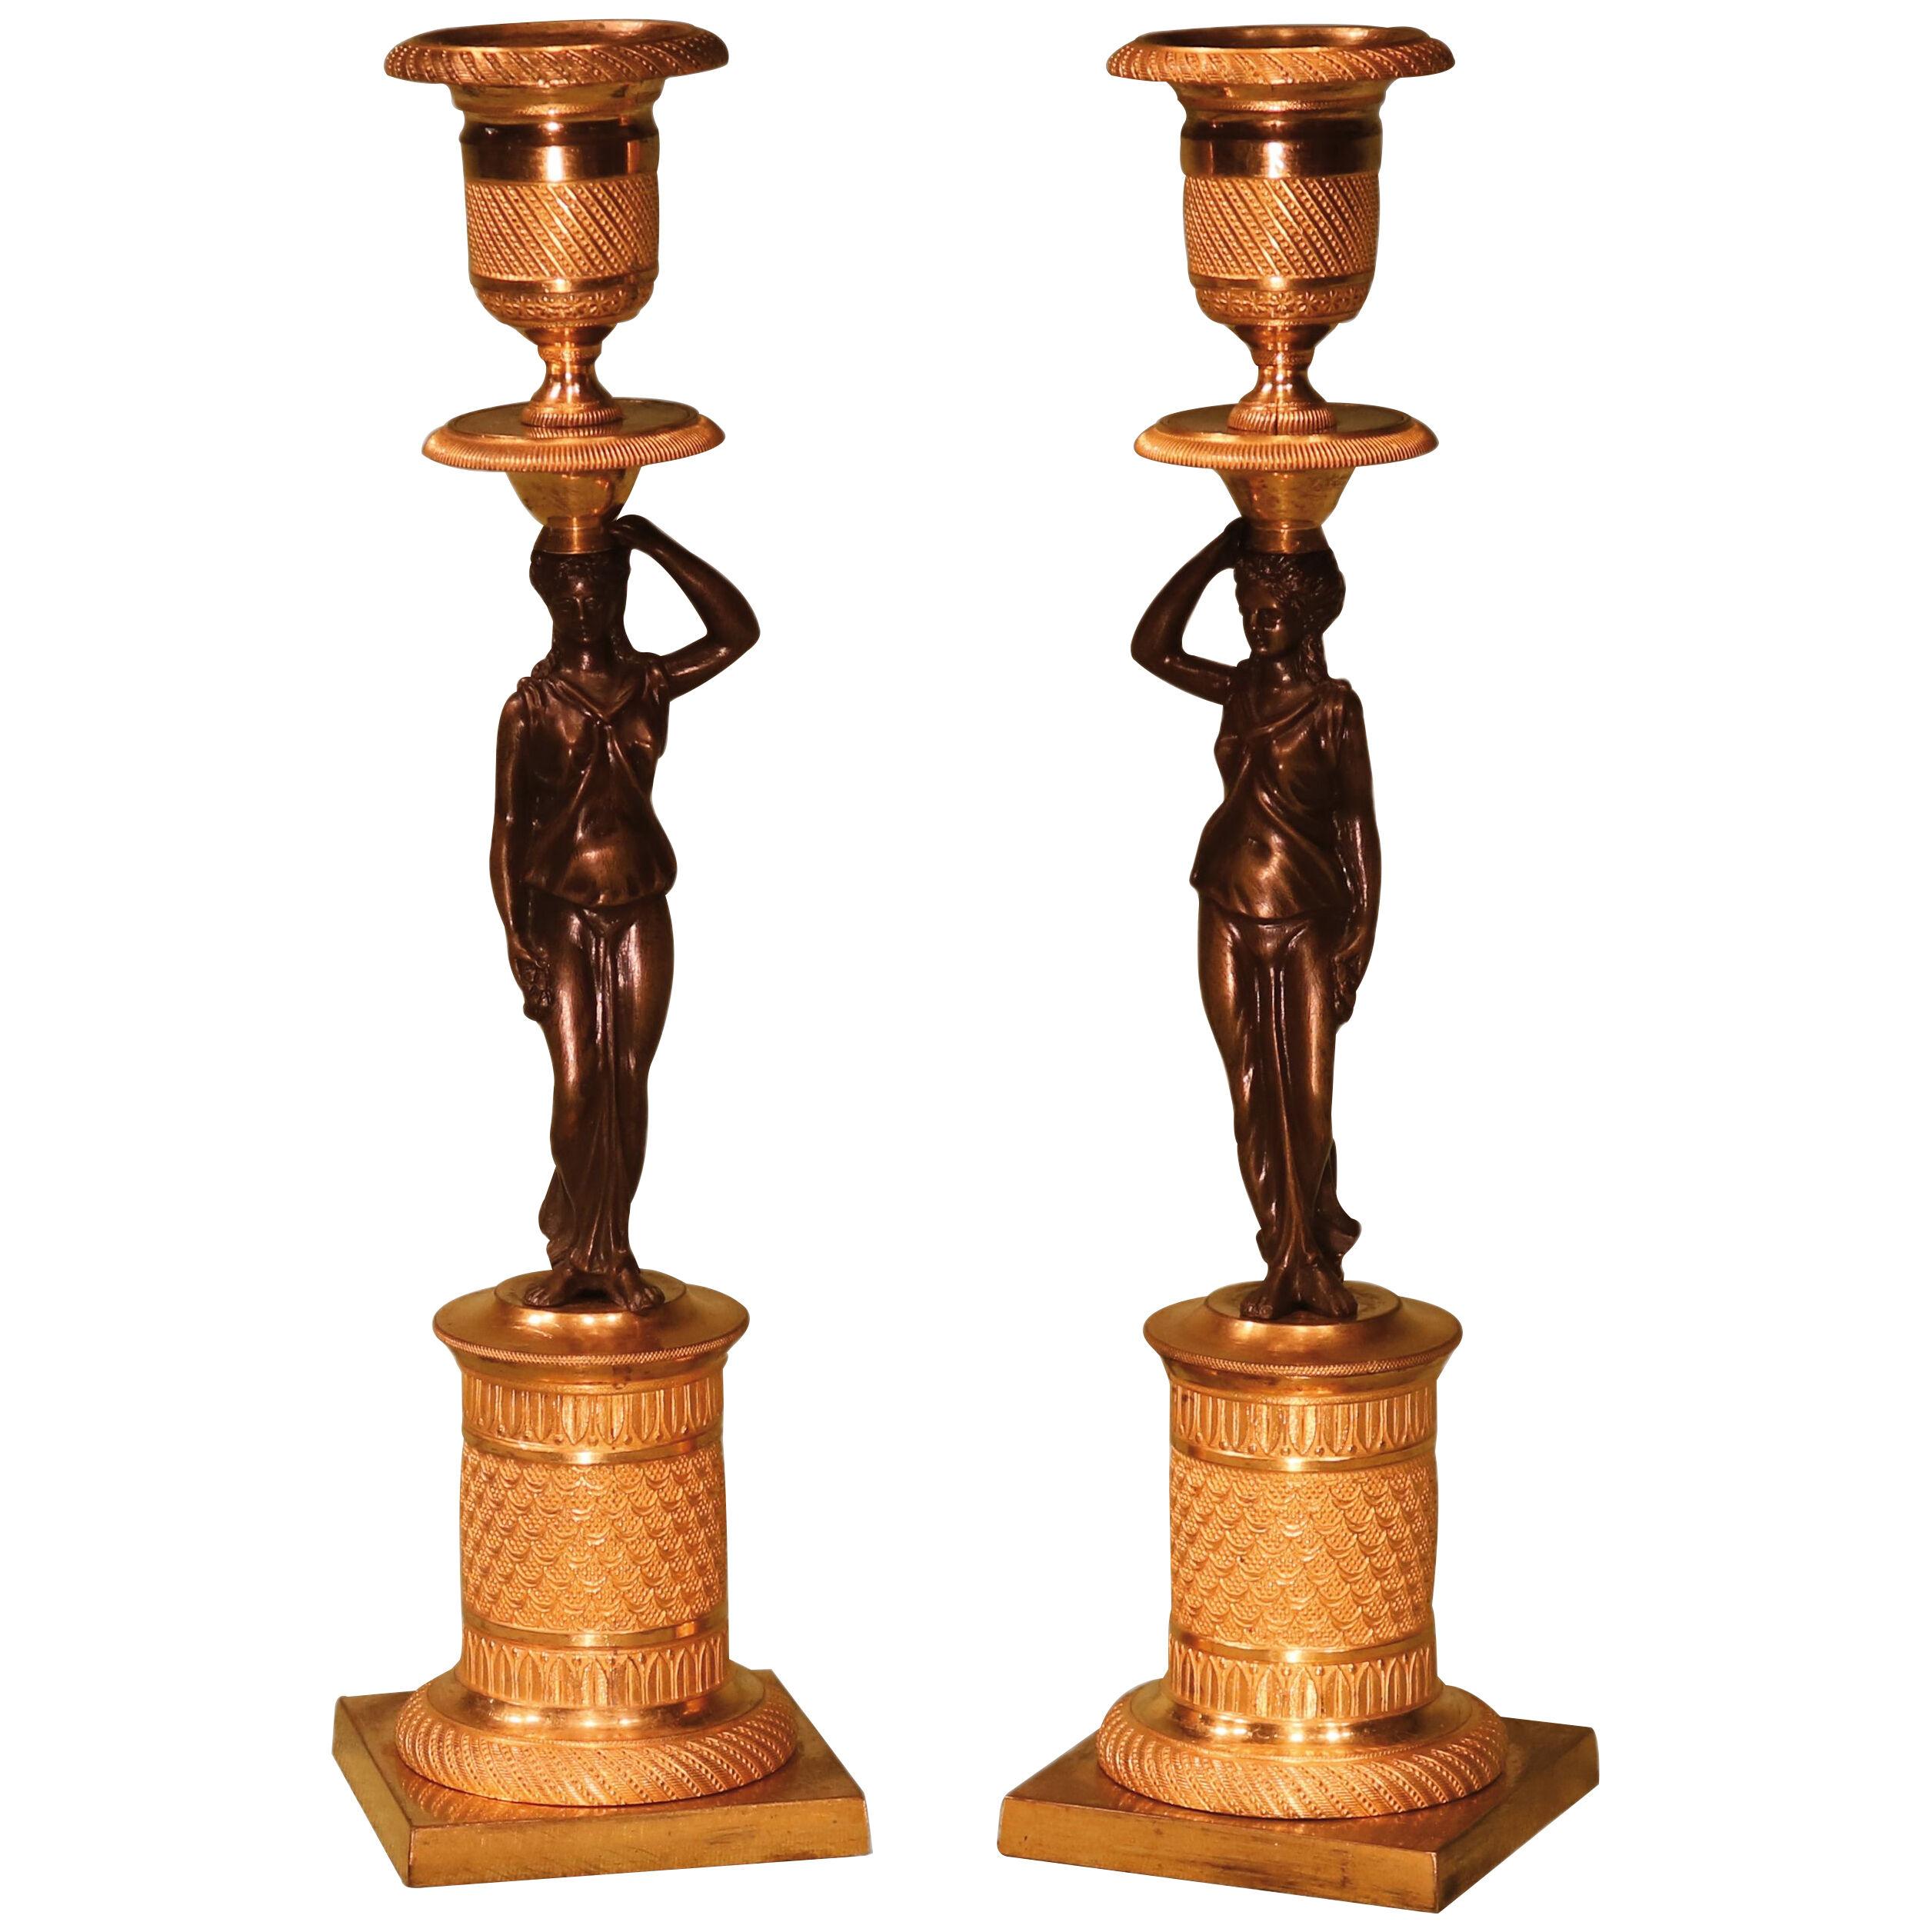 A pair of Regency period bronze and omolu candelsticks